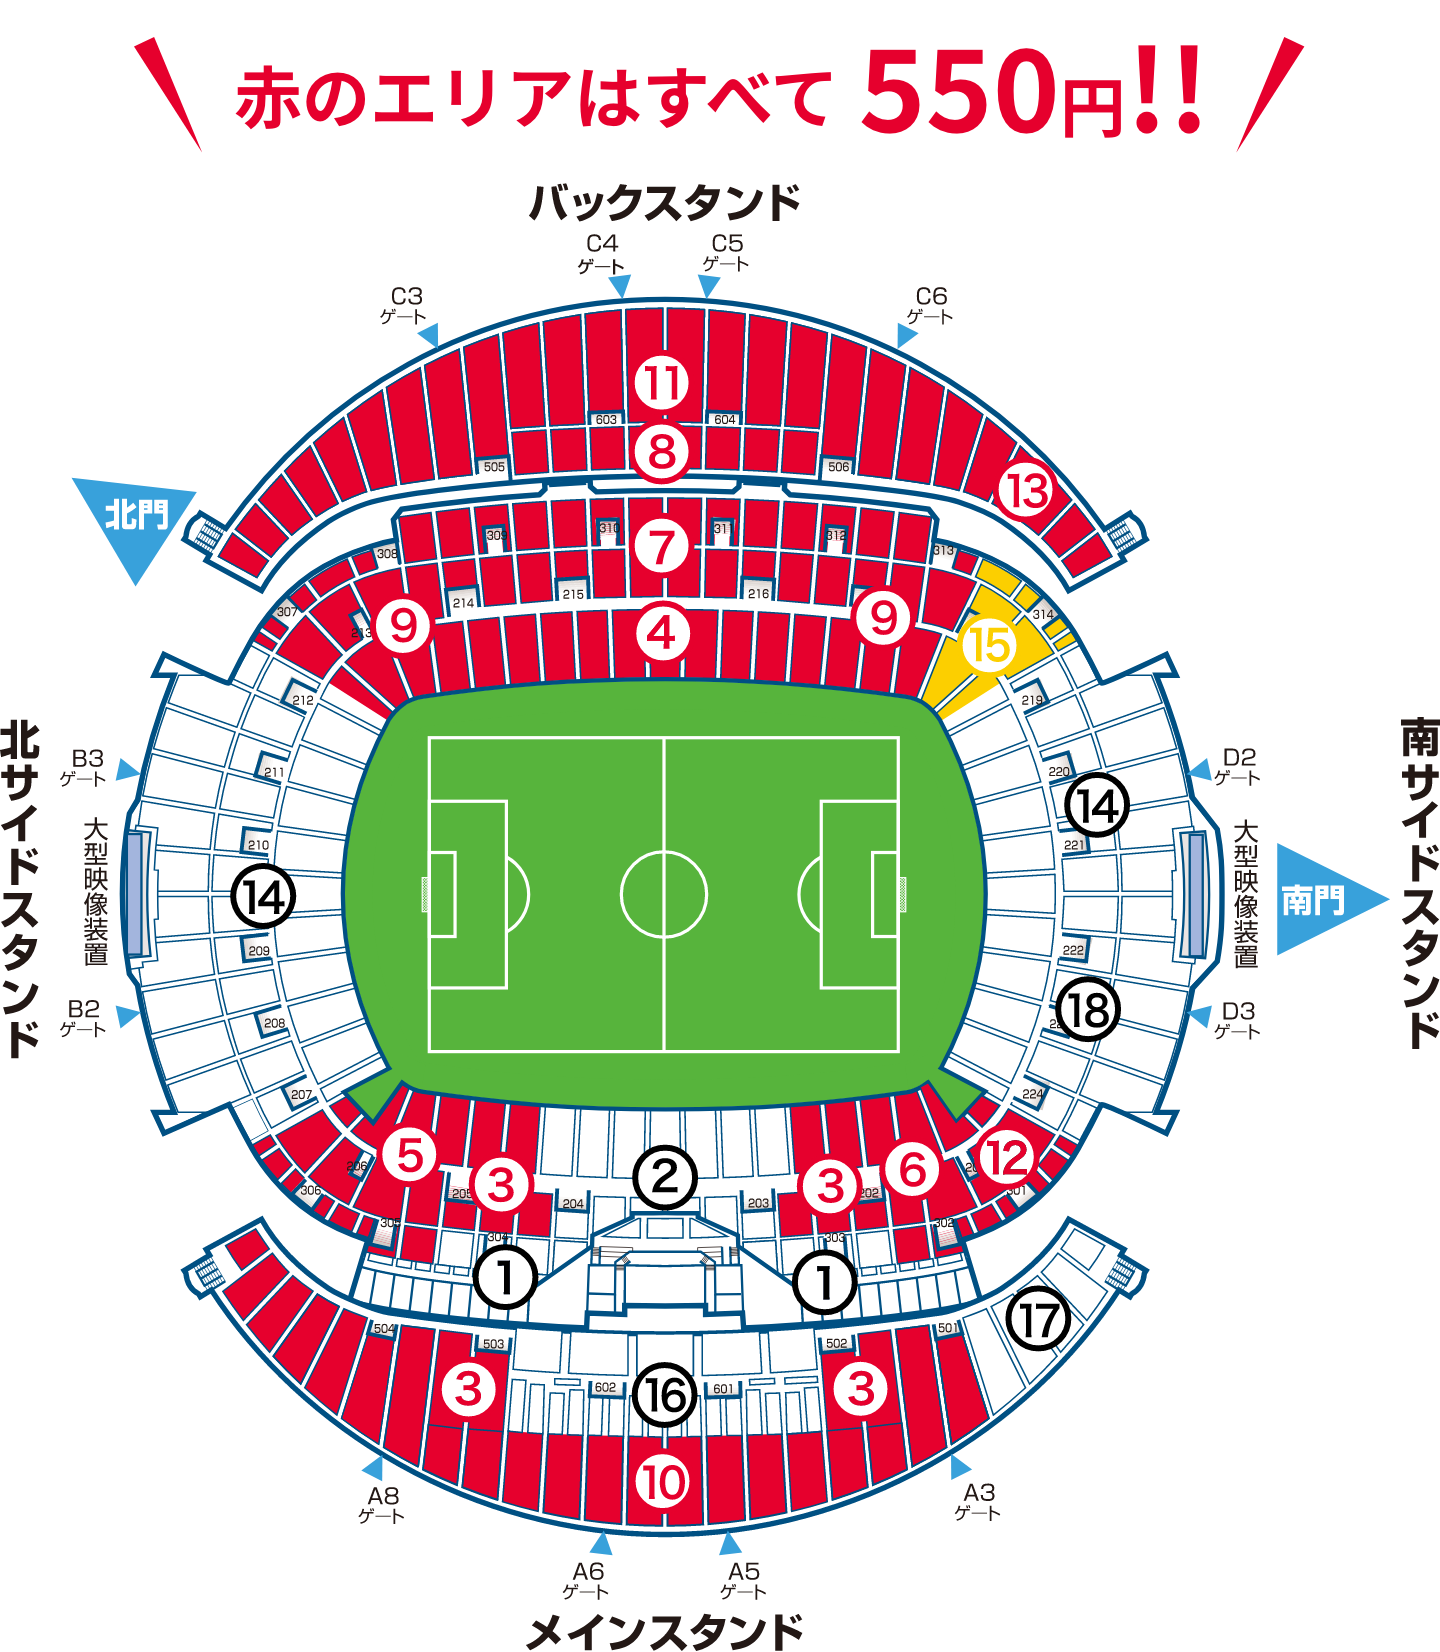 stadium seating